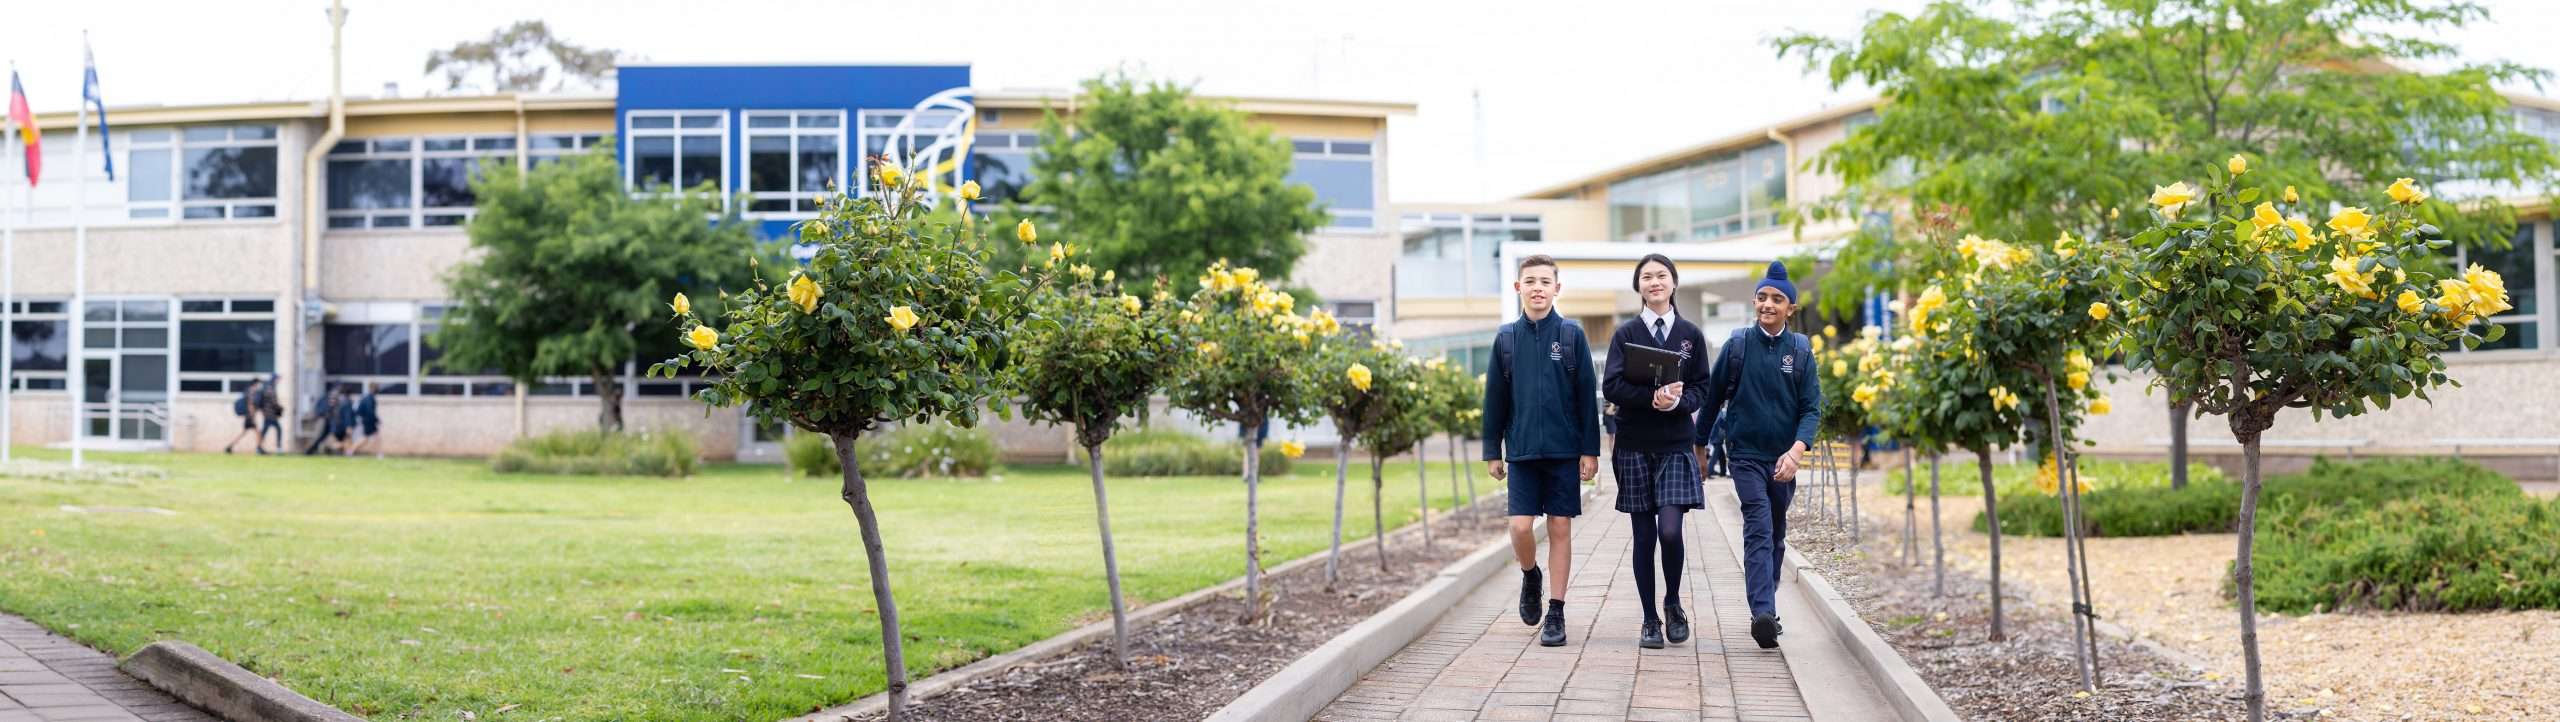 Three students walking in school grounds